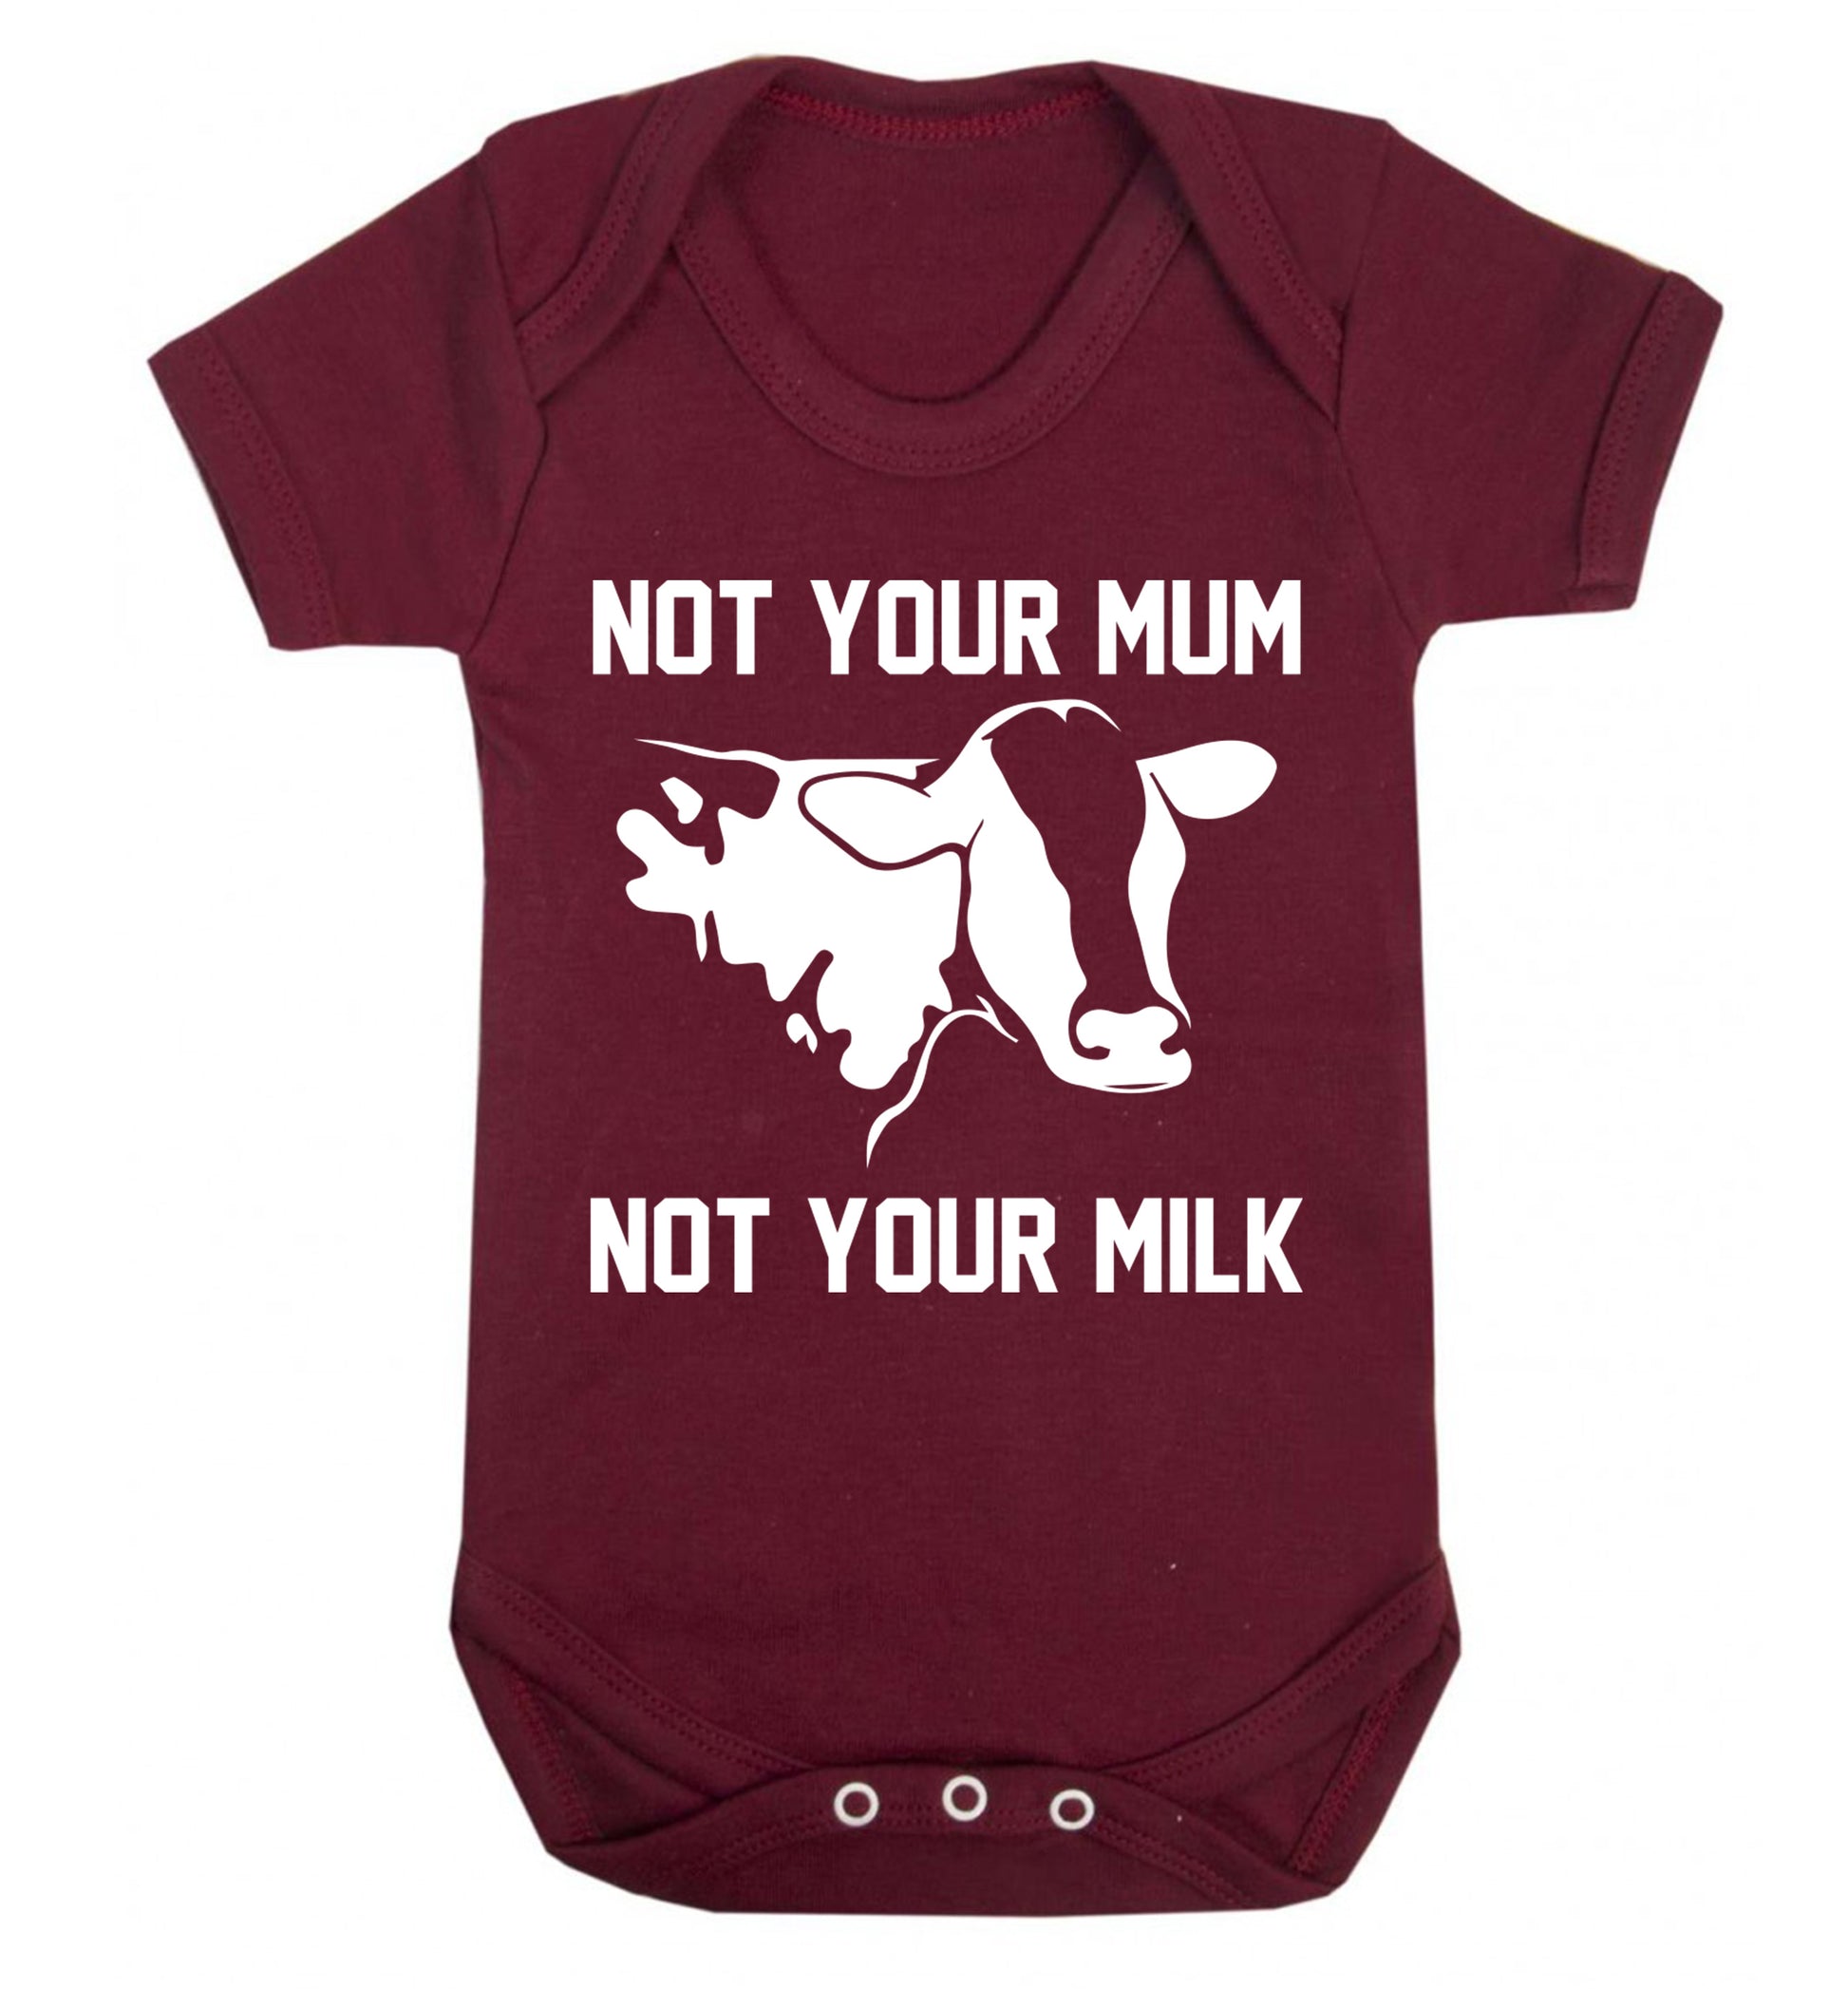 Not your mum not your milk Baby Vest maroon 18-24 months